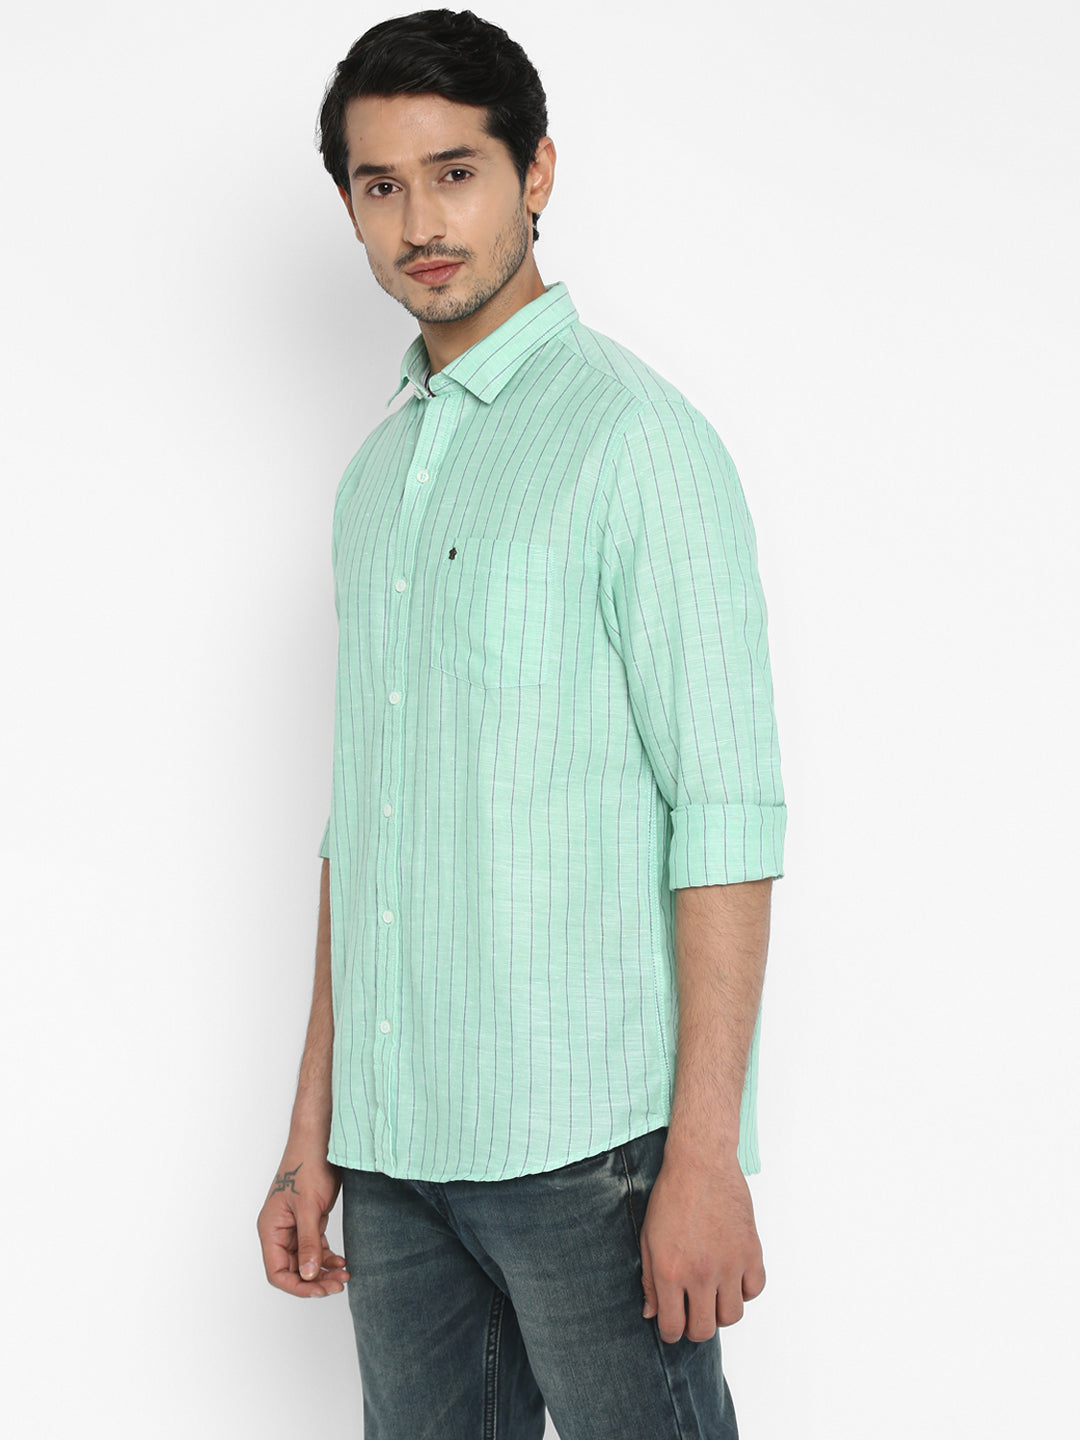 Cotton Linen Light Blue Striped Slim Fit Casual Shirt